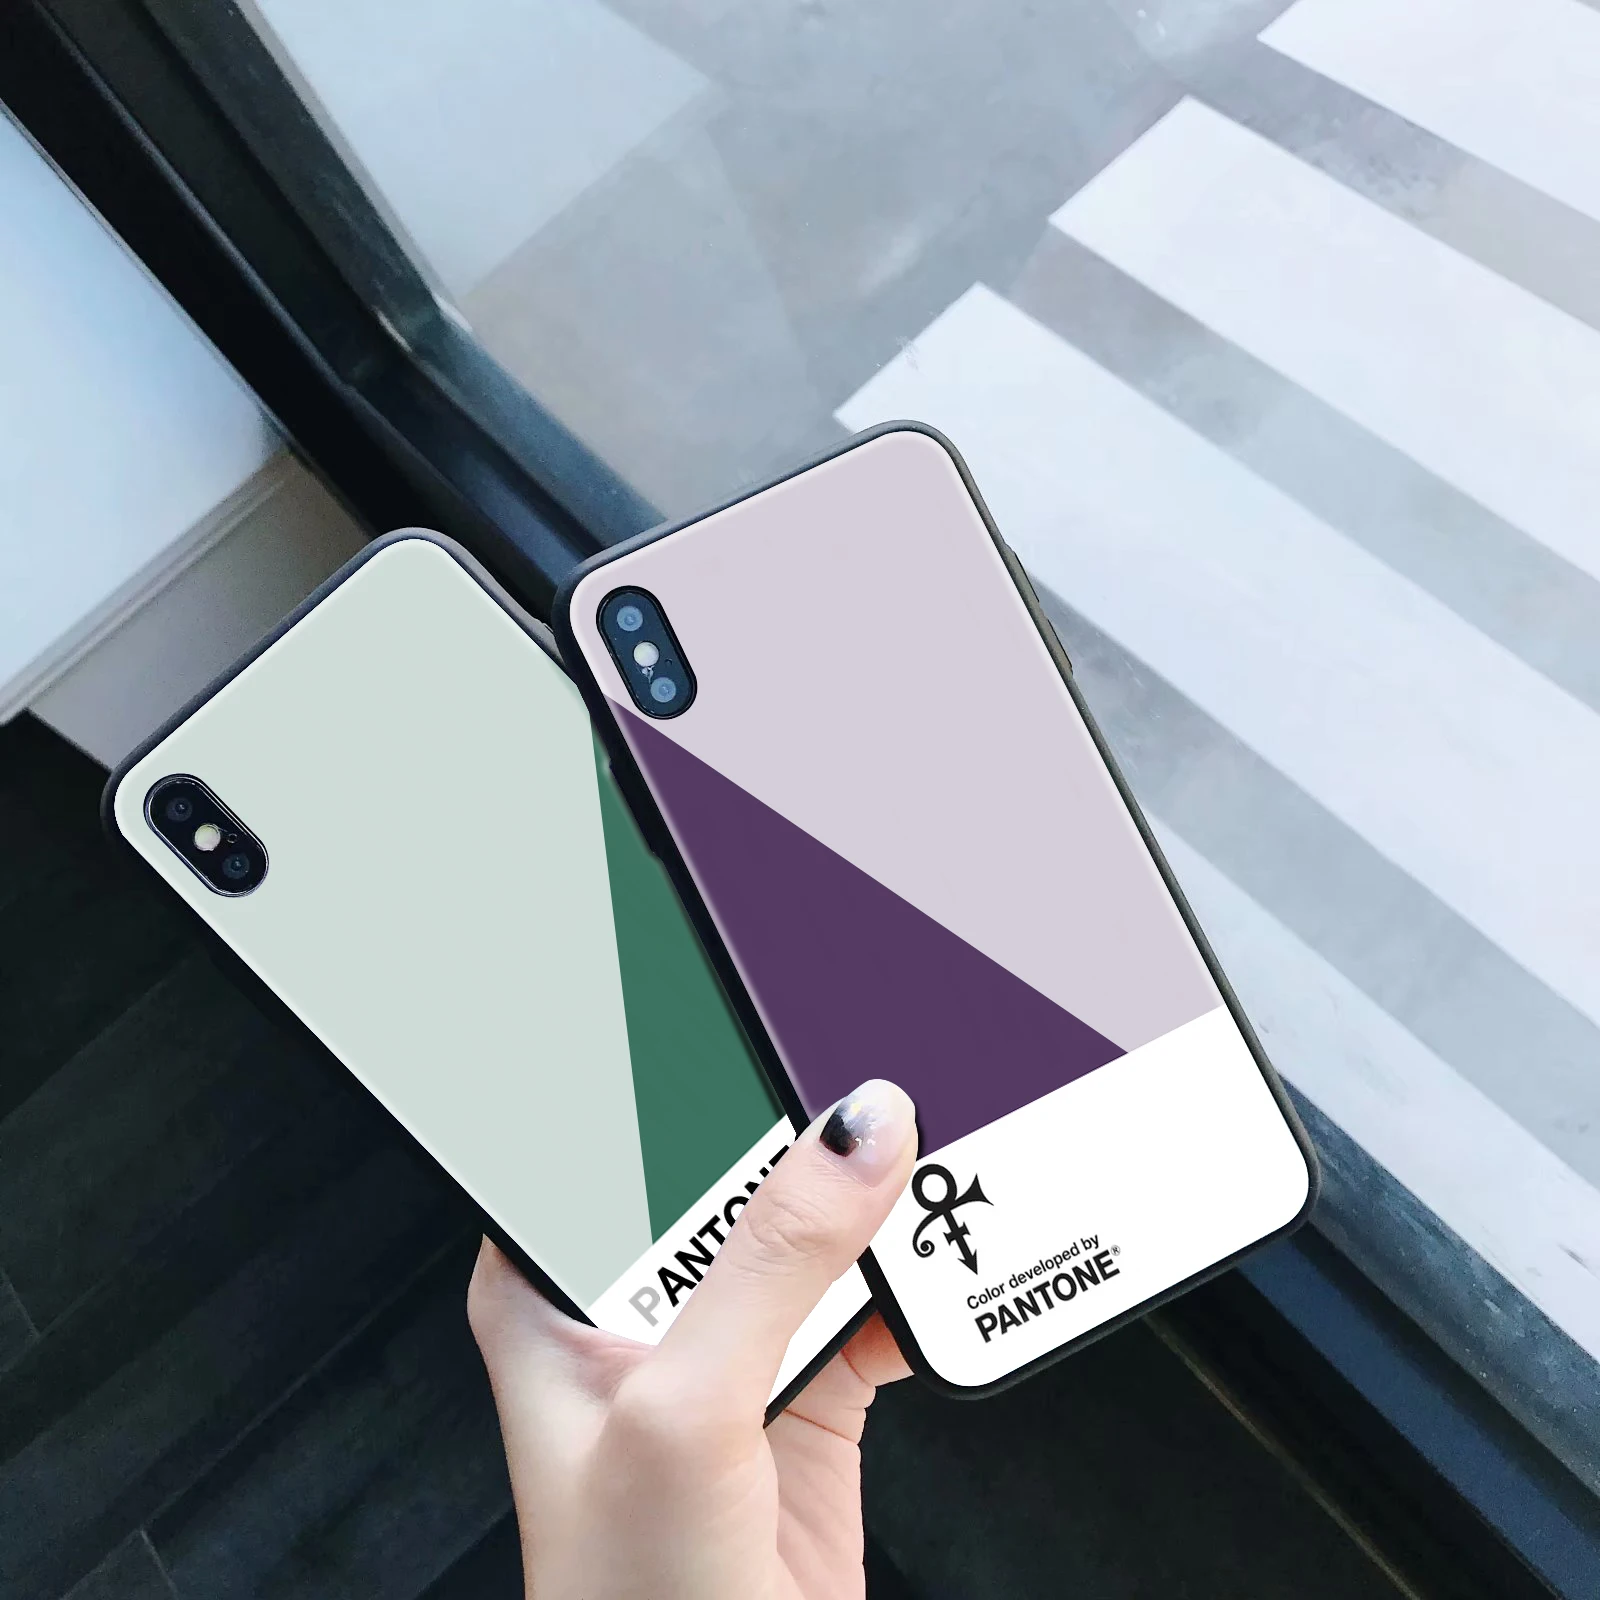 Pantone цветной чехол из закаленного стекла для телефона для iphone 5 6 7 8 6s 6s plus 7plus 8plus x xr xs xsmax